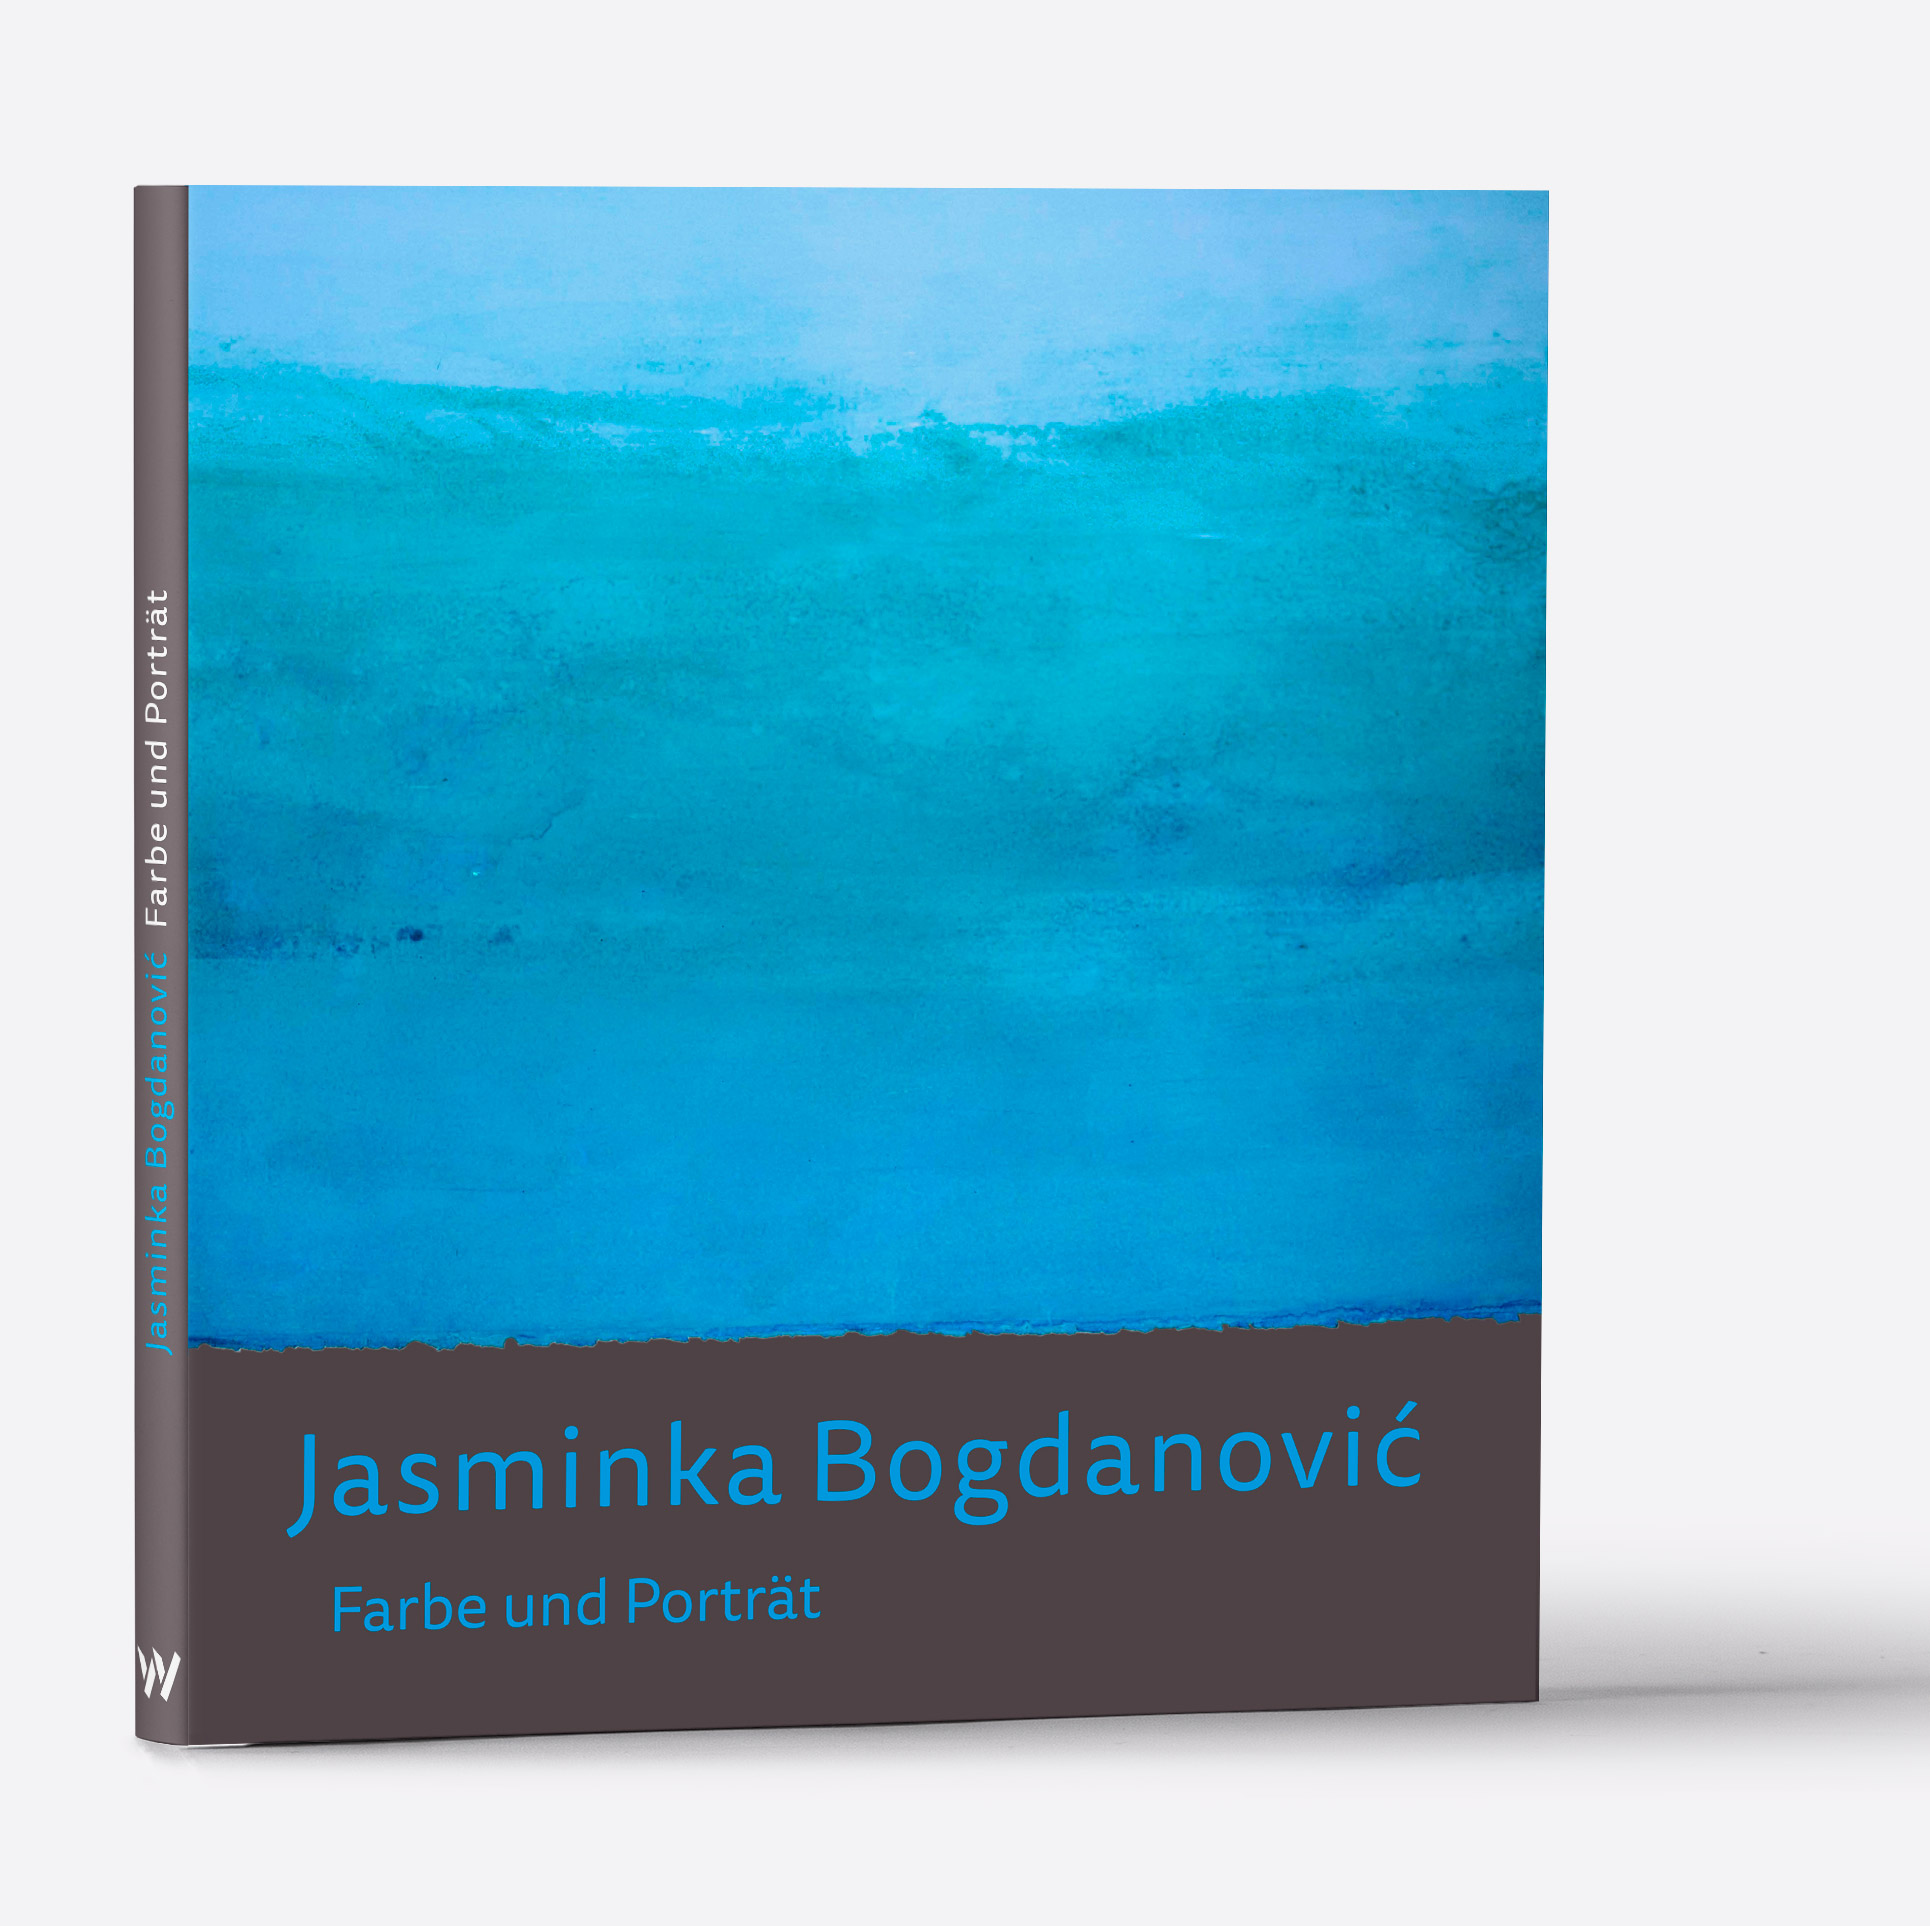 Buchprojekt Katalog-Bogdanovic